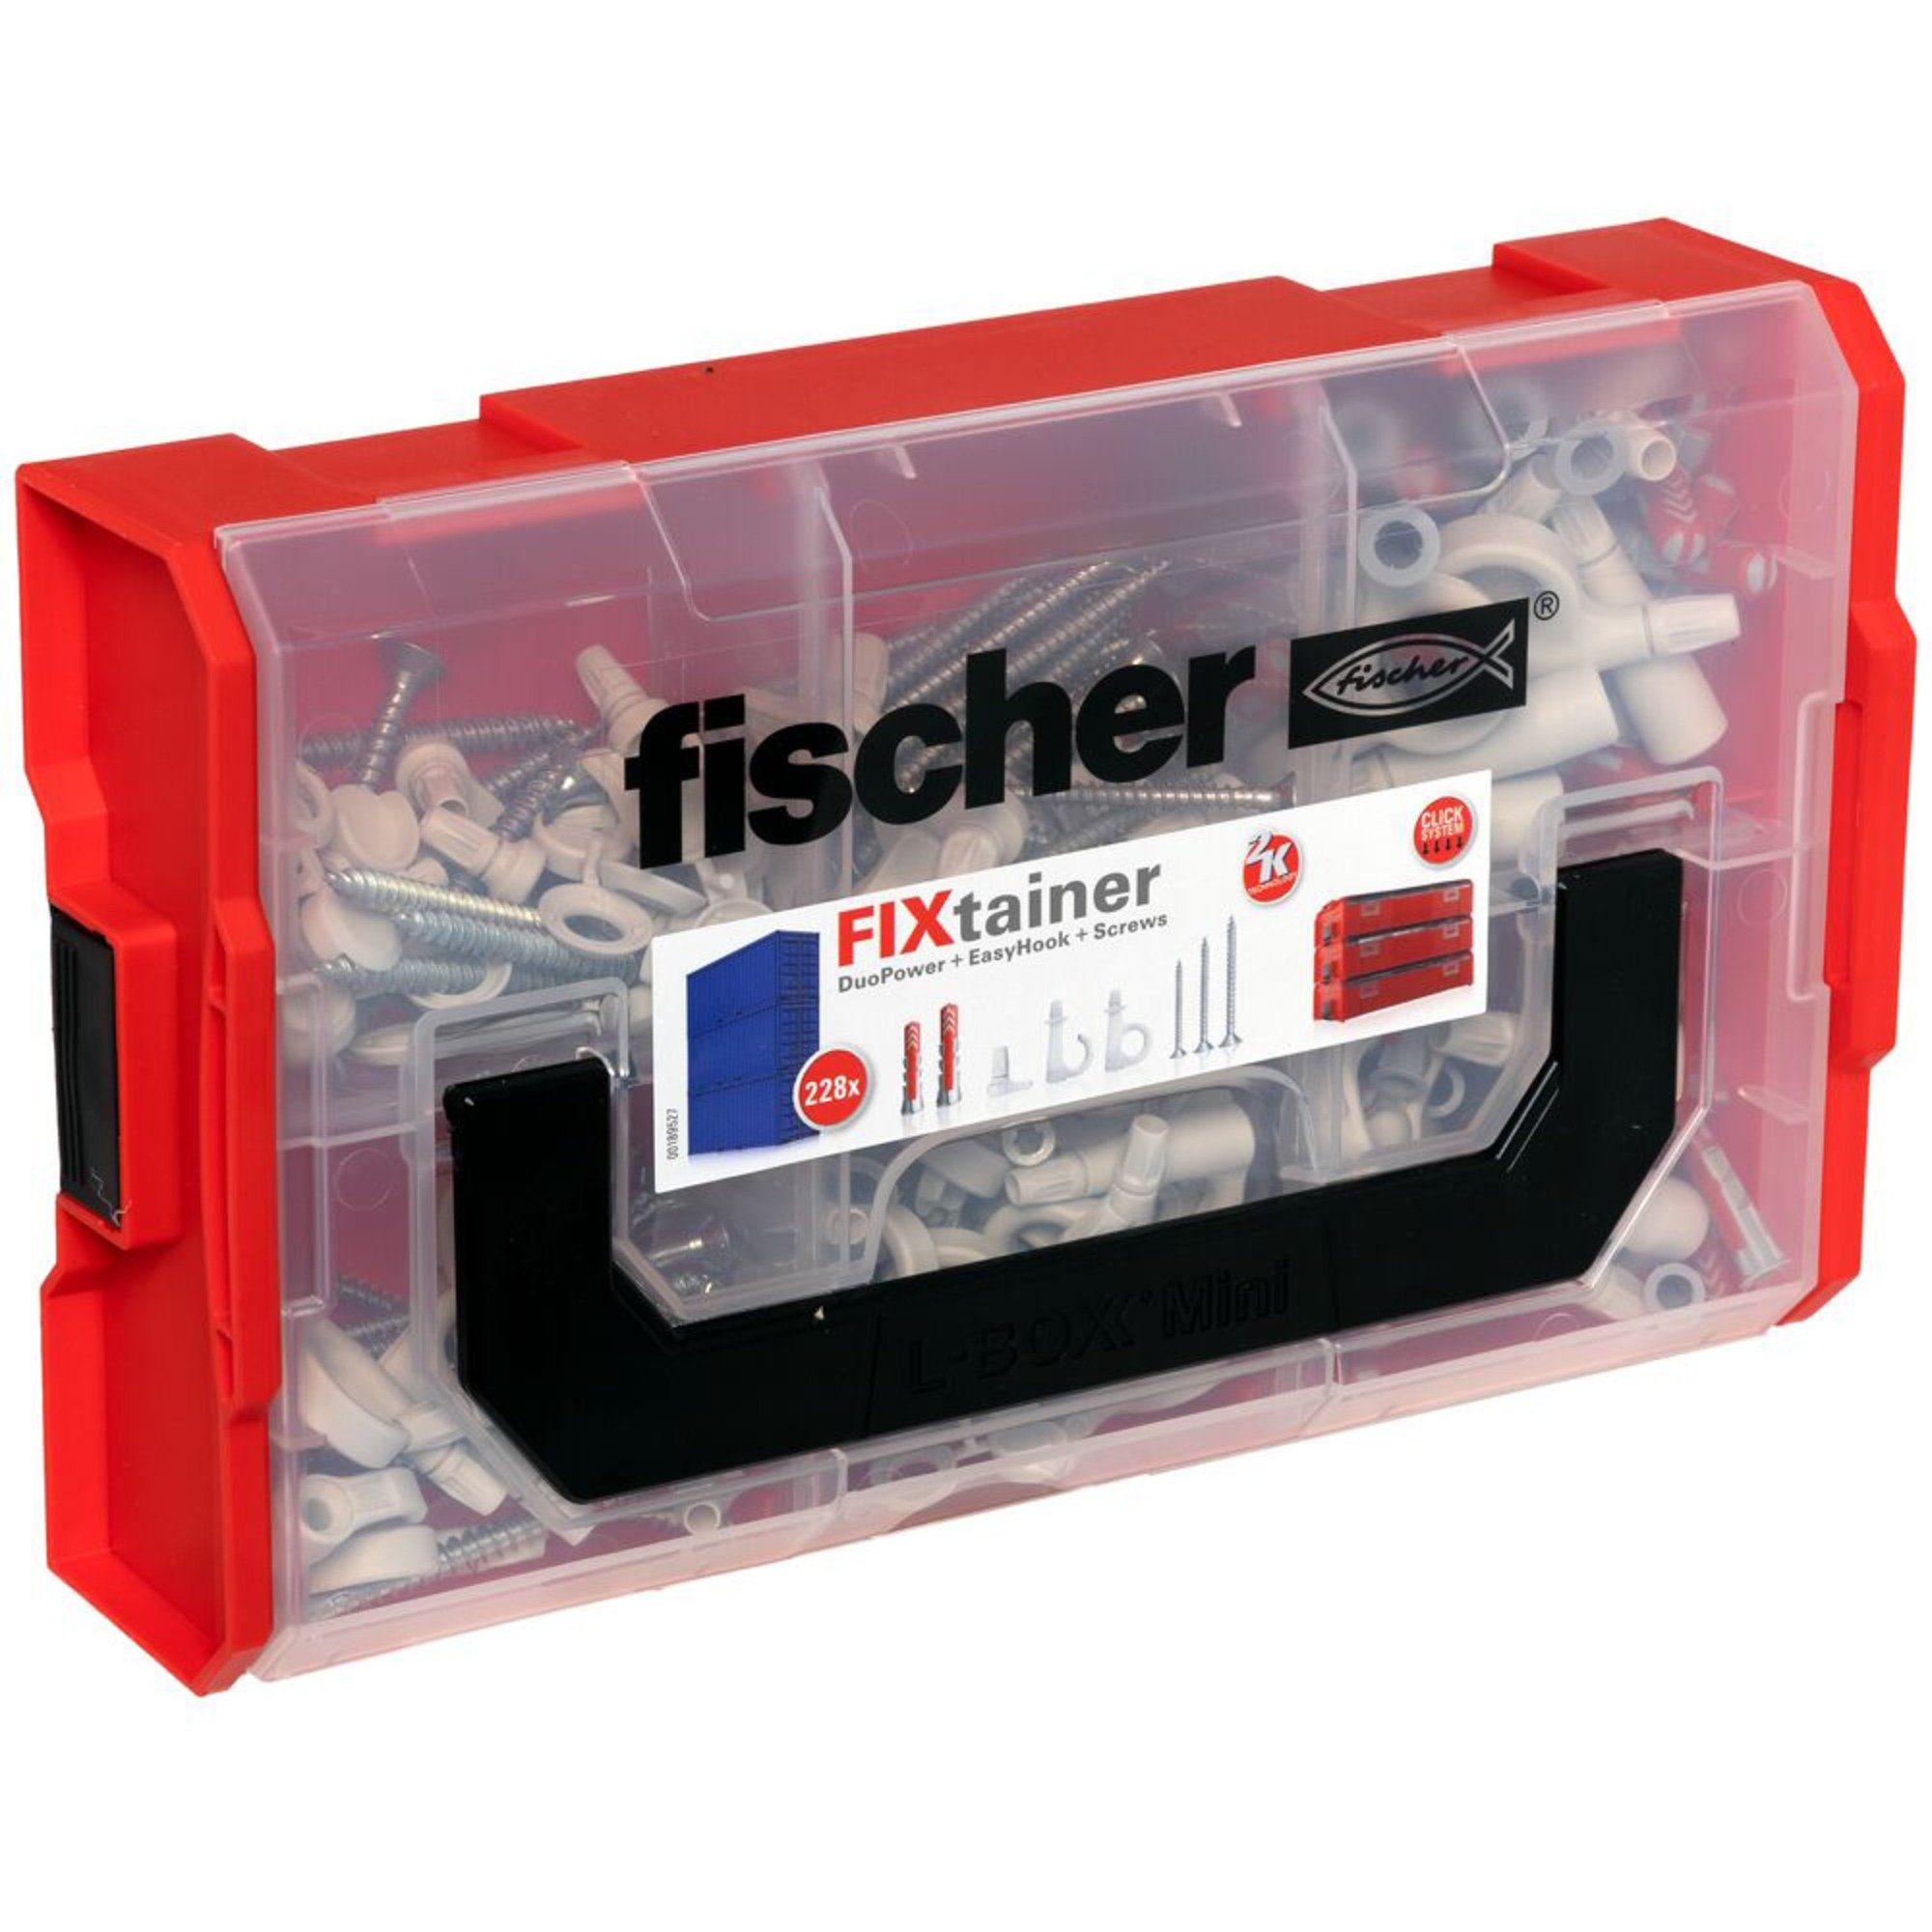 EasyHook + Universaldübel DuoPower fischer + Schraube FixTainer Fischer